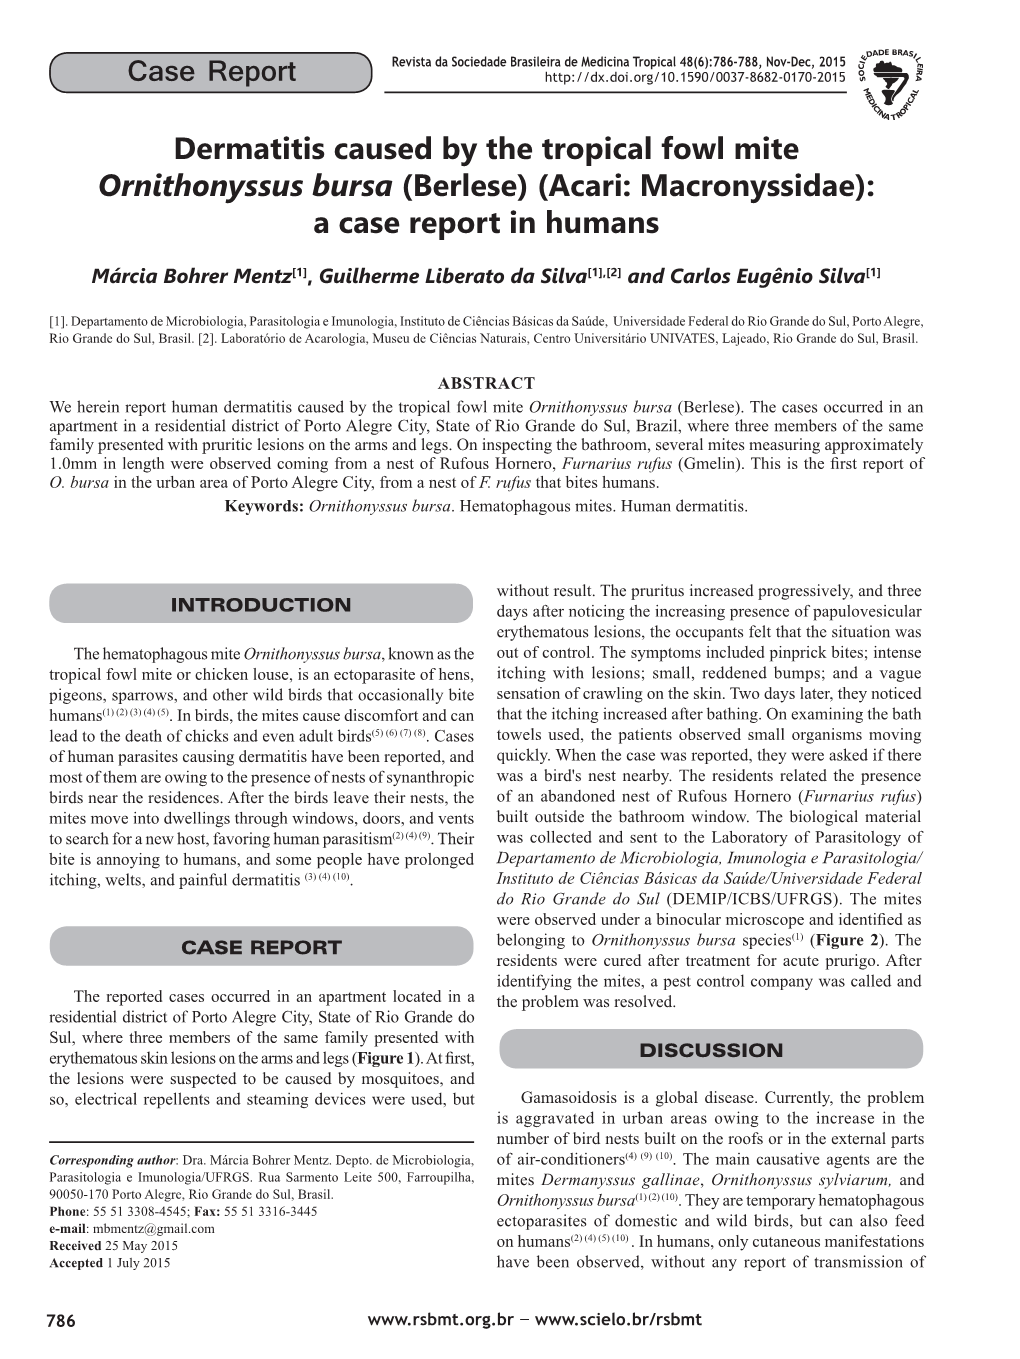 Dermatitis Caused by the Tropical Fowl Mite Ornithonyssus Bursa (Berlese)(Acari: Macronyssidae): a Case Report in Humans